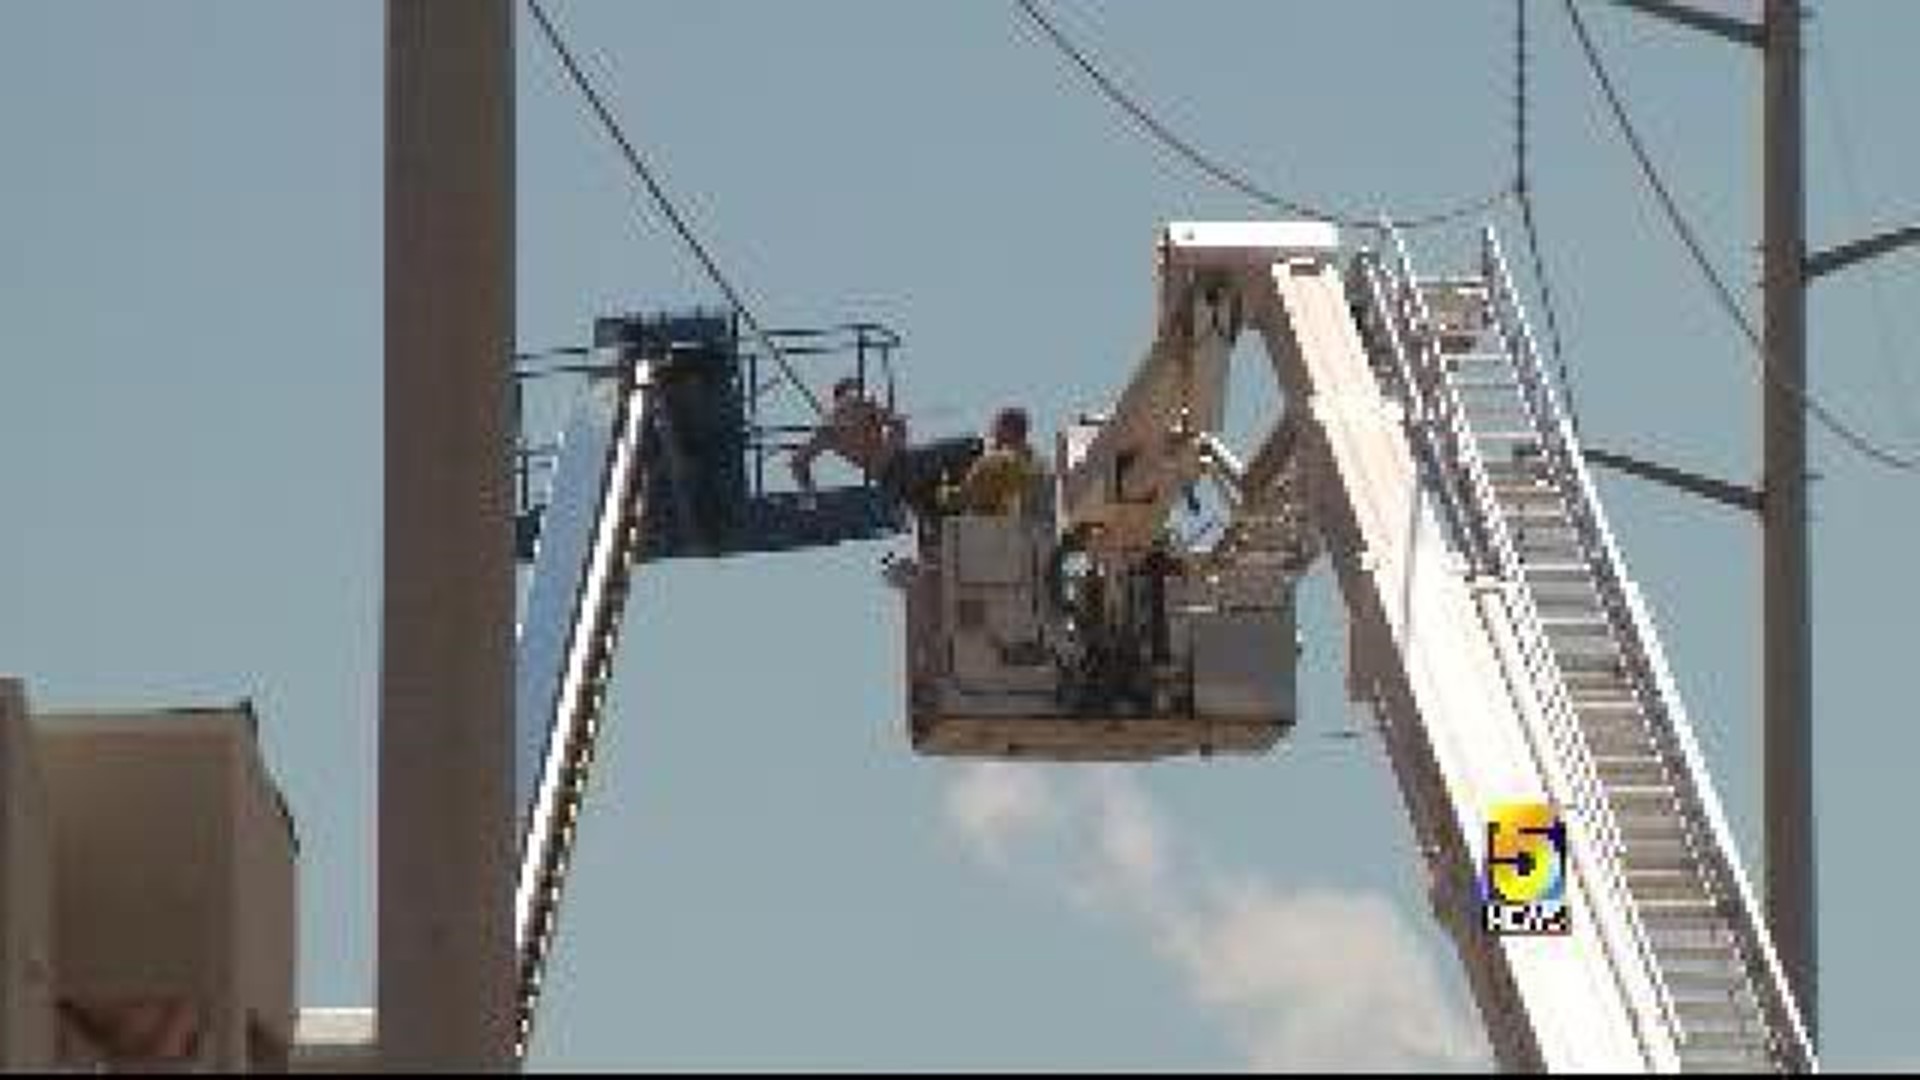 Men Injured By High Voltage Line At Fayetteville Construction Site